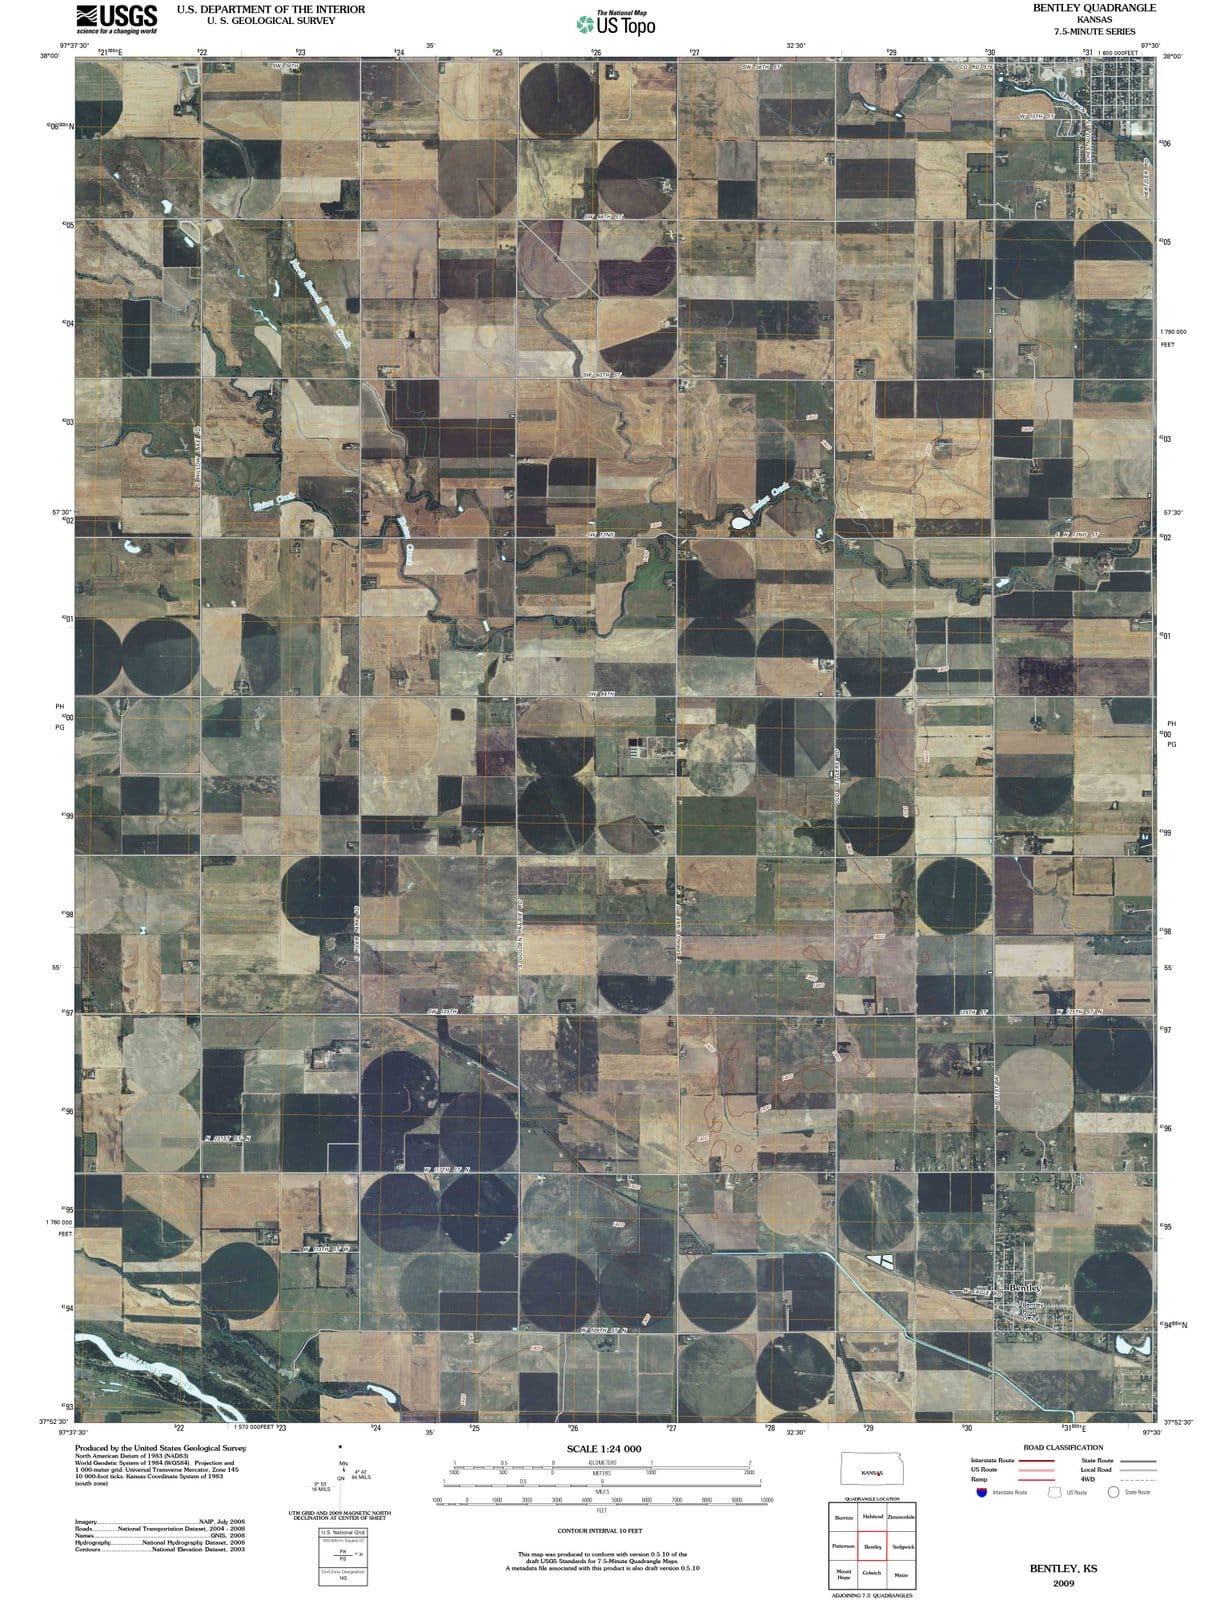 2009 Bentley, KS - Kansas - USGS Topographic Map